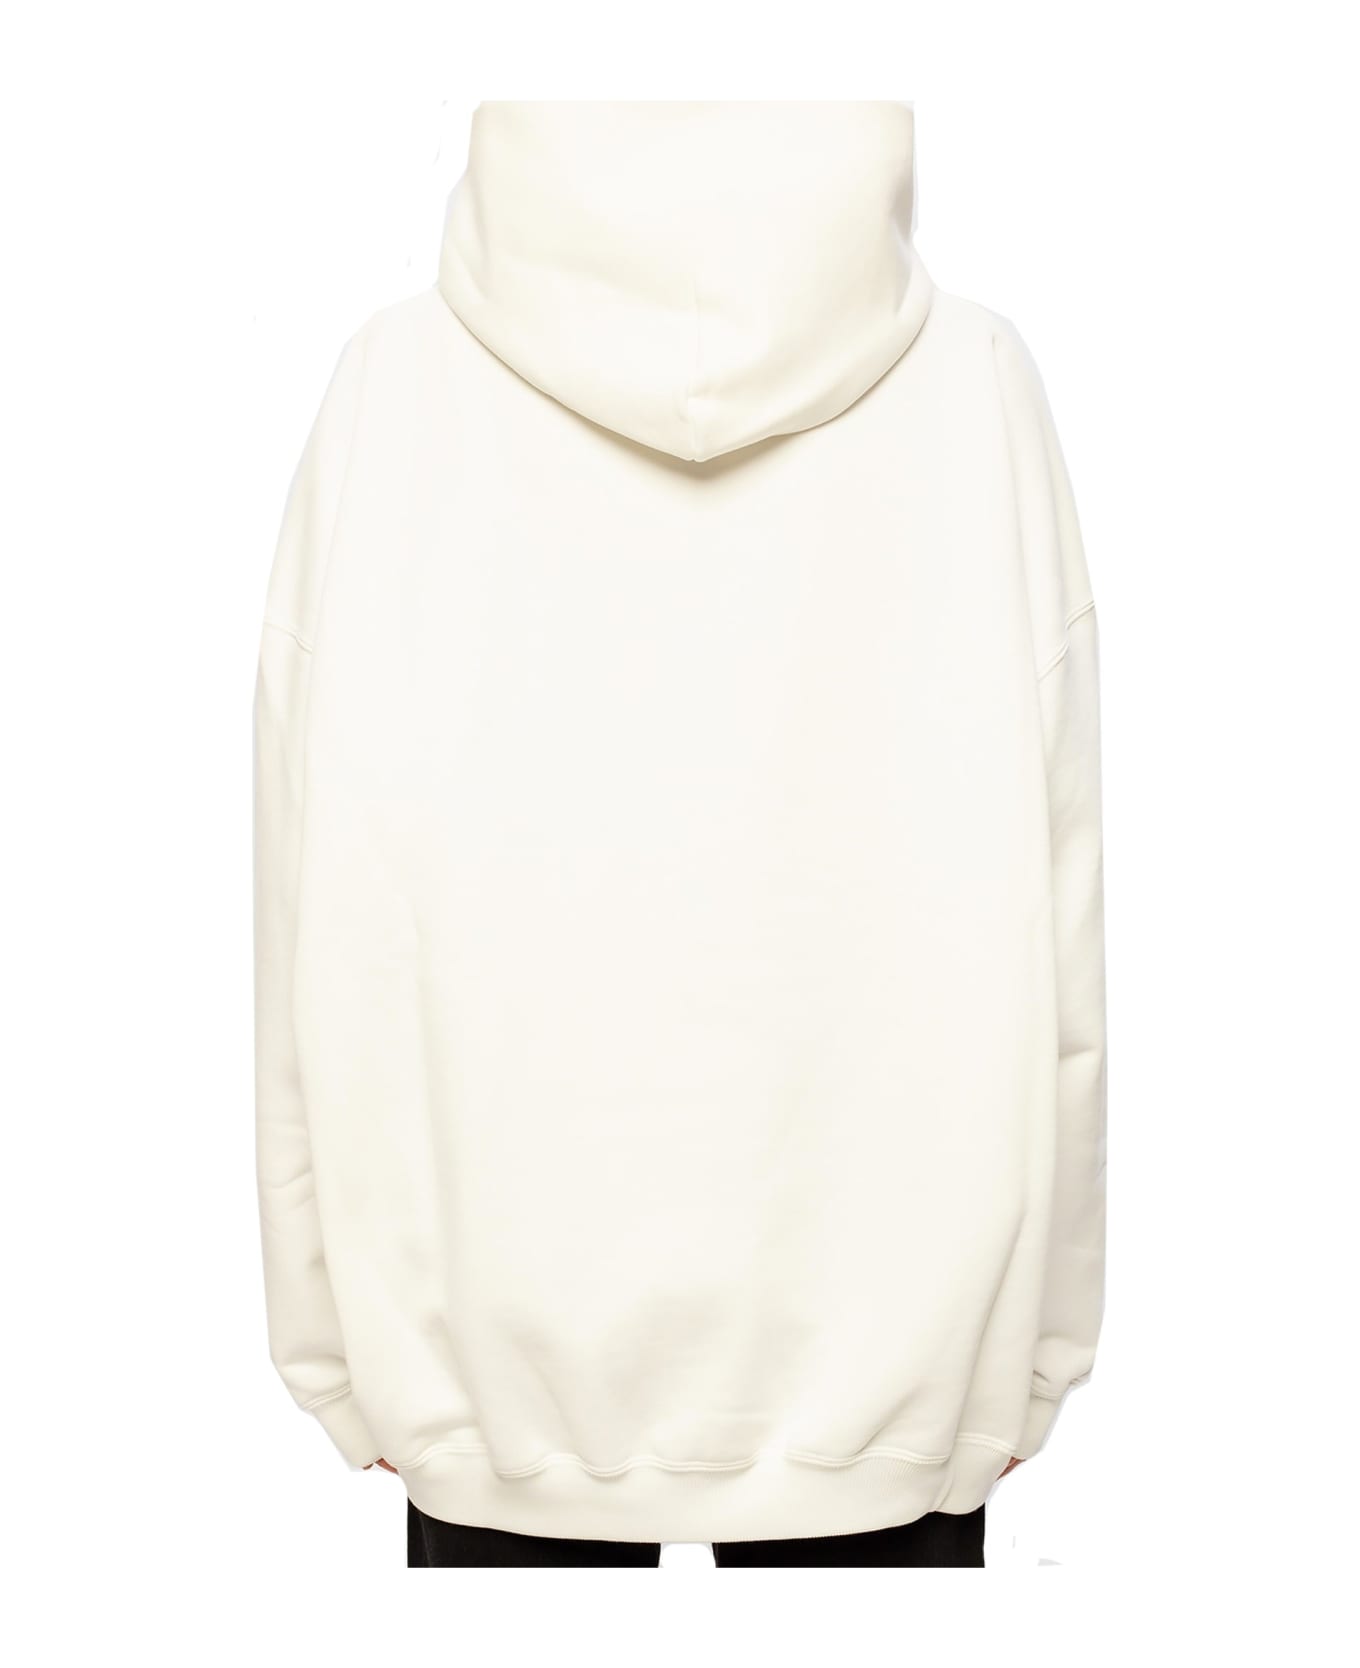 Balenciaga Logo Hooded Sweatshirt - White フリース